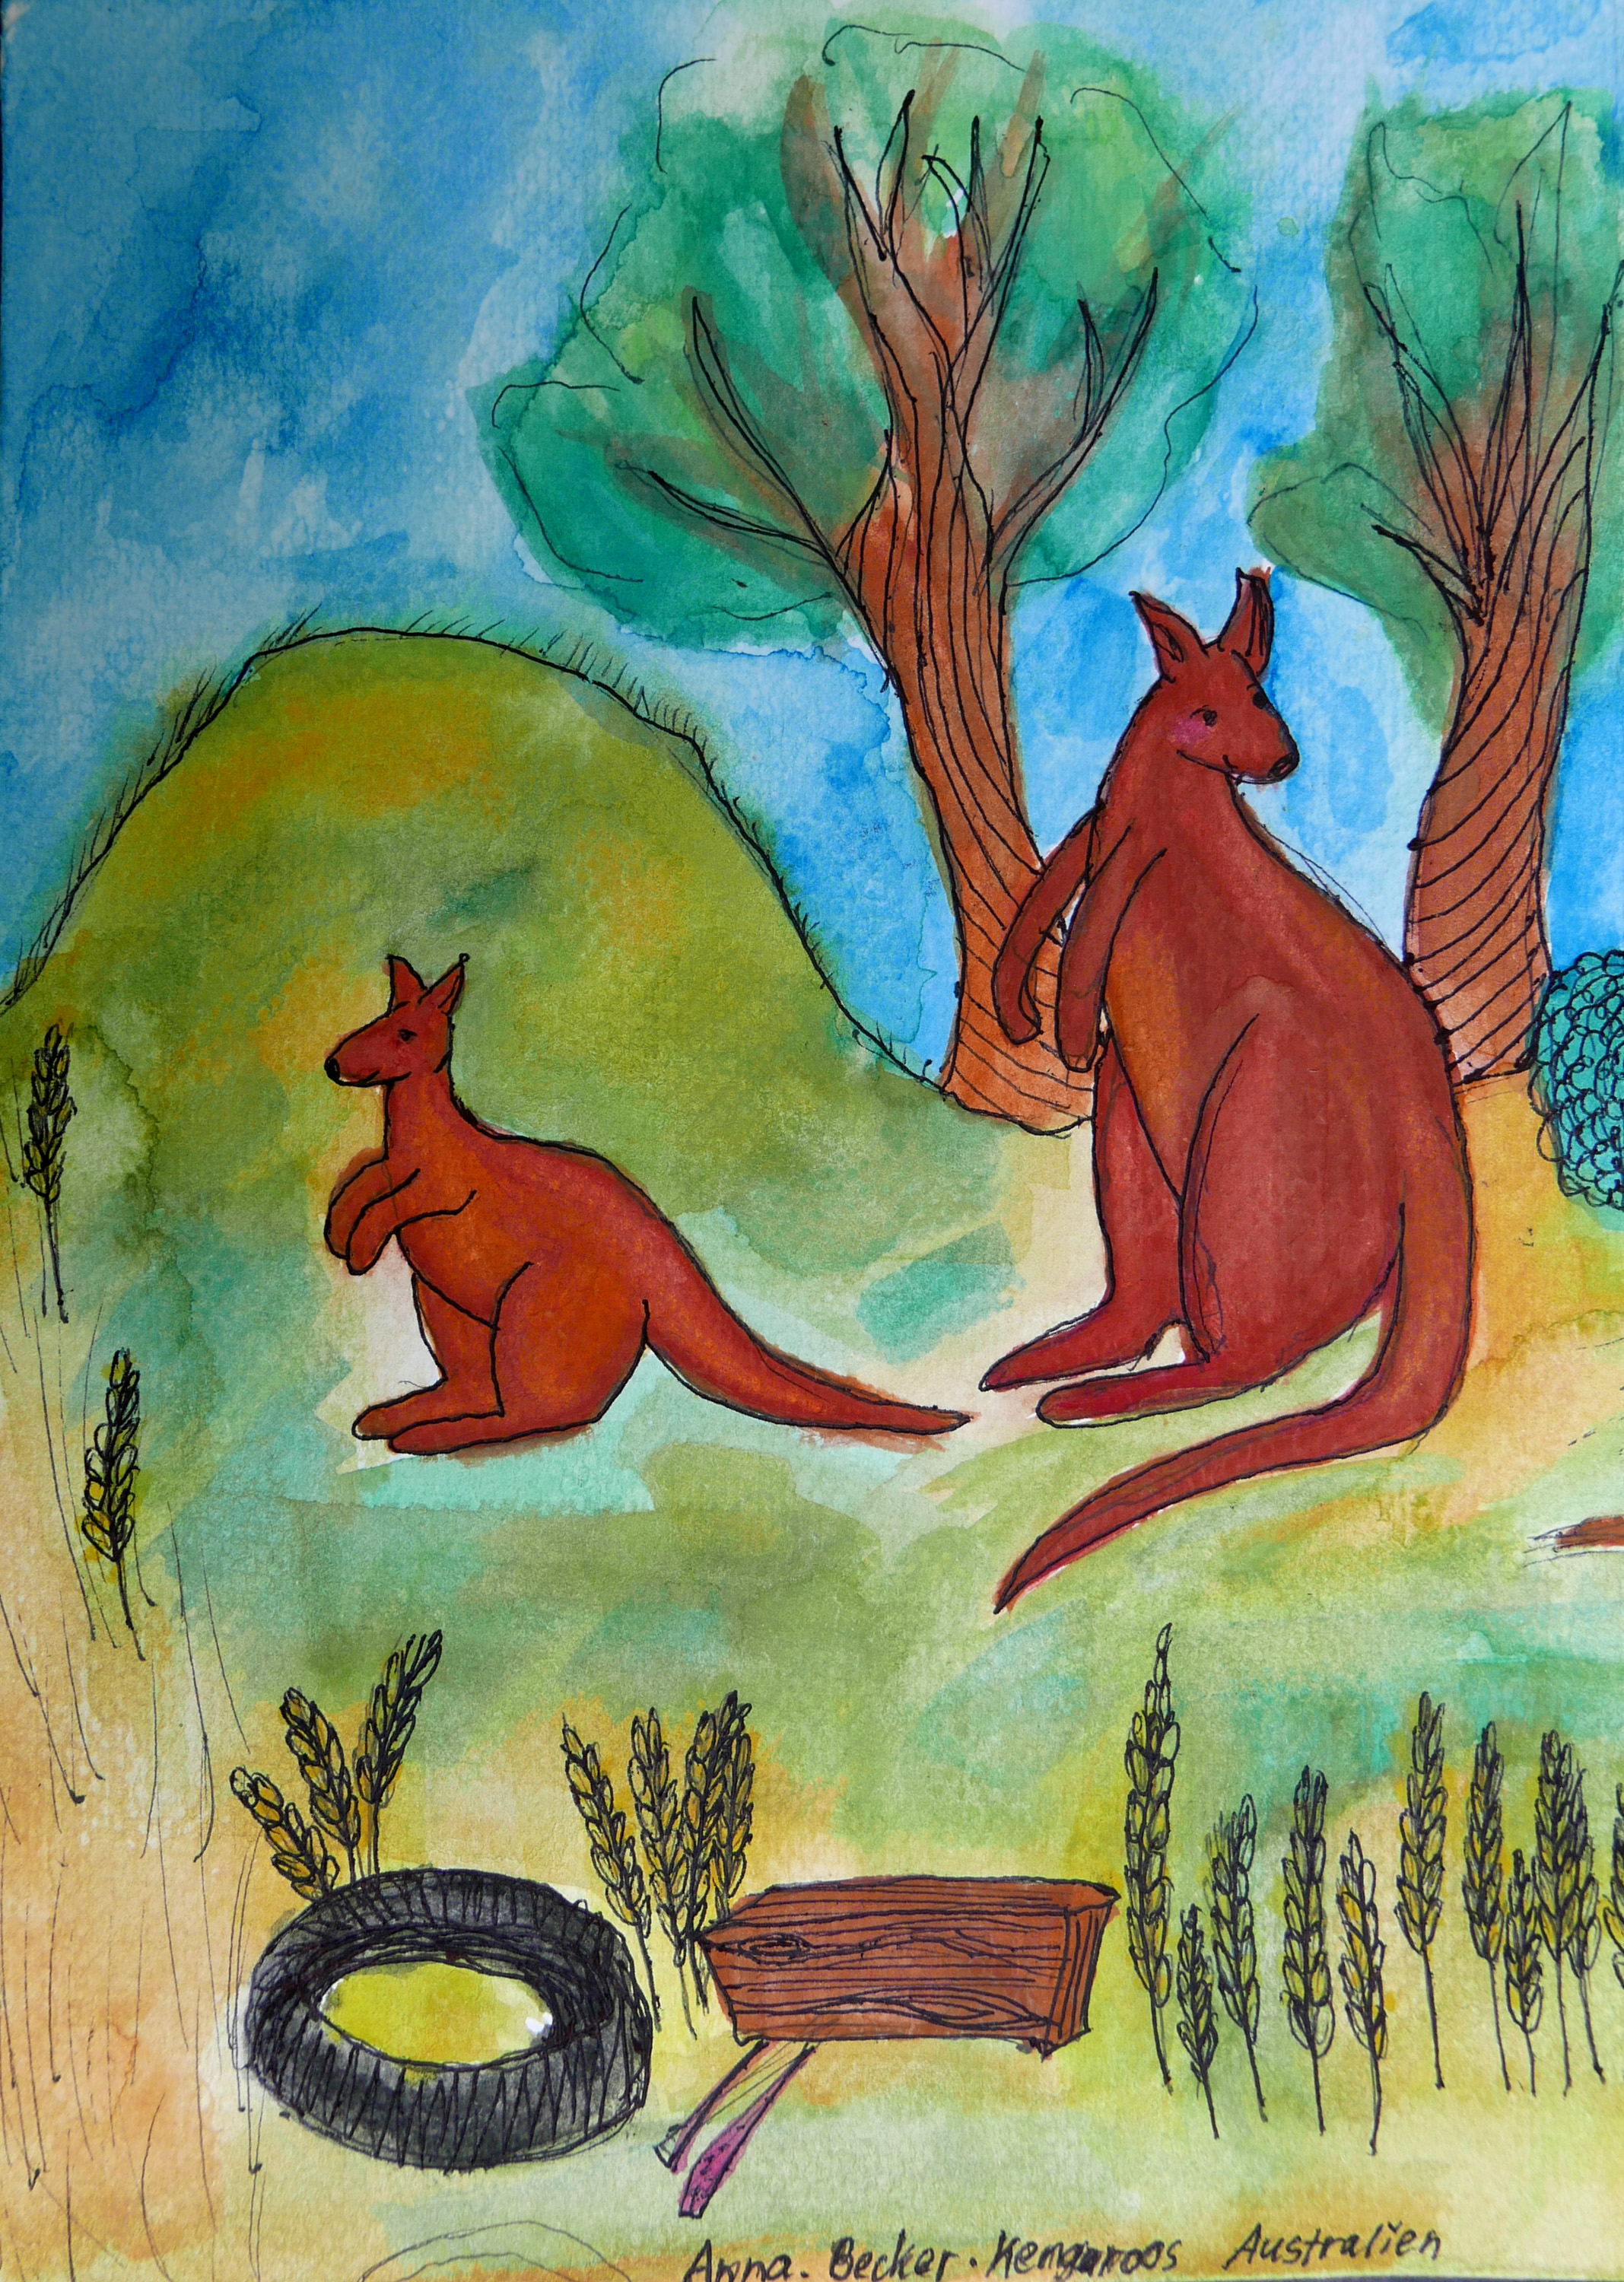 kangaroos Australia